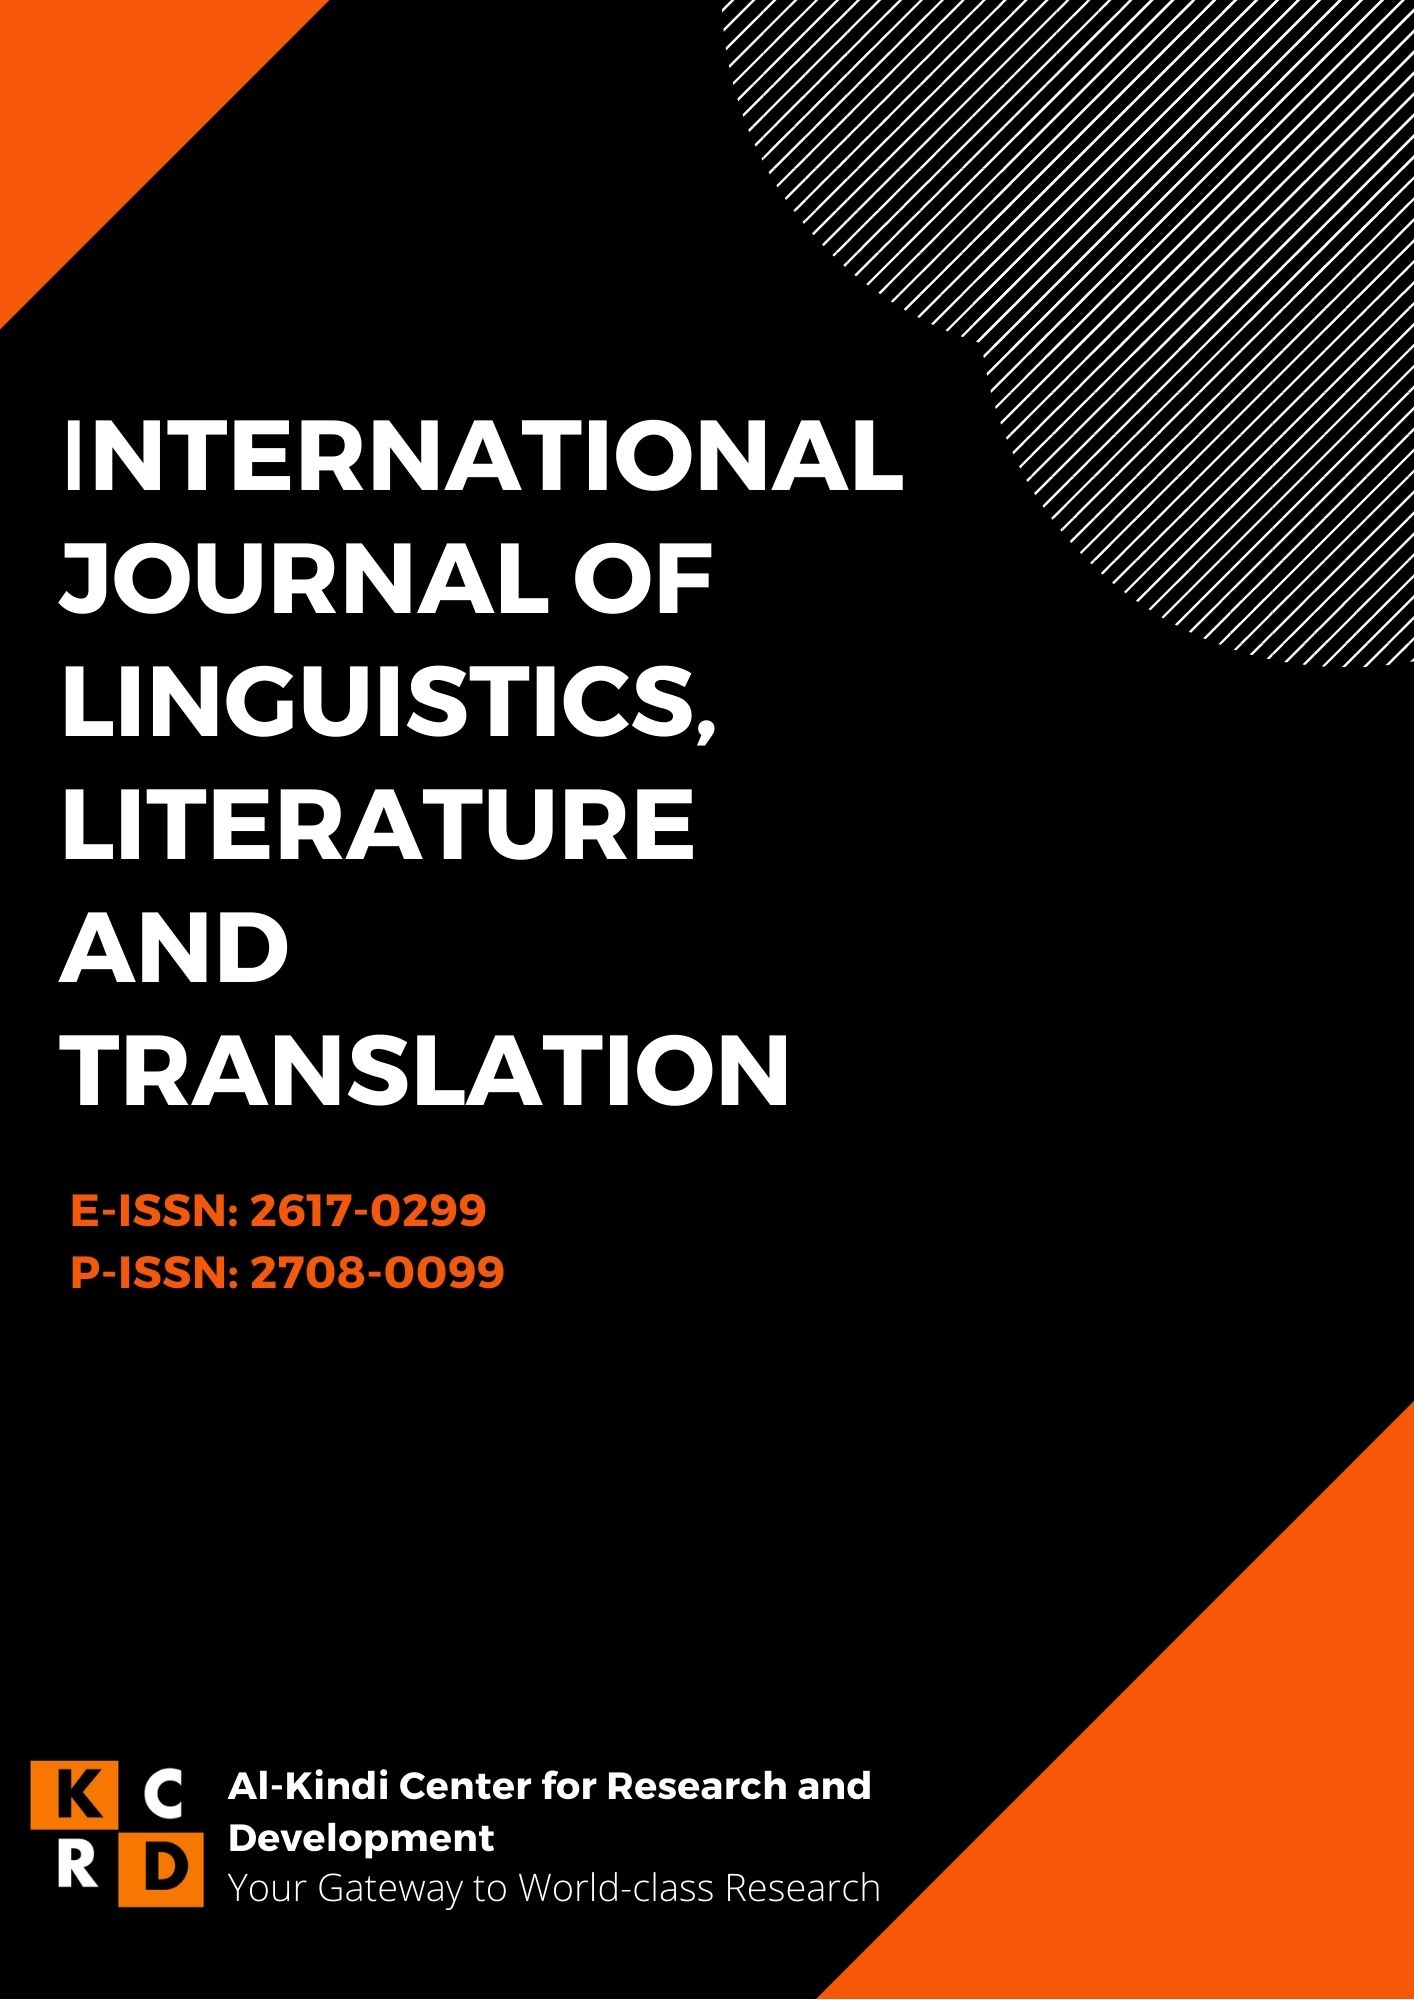  International Journal of Linguistics, Literature and Translation